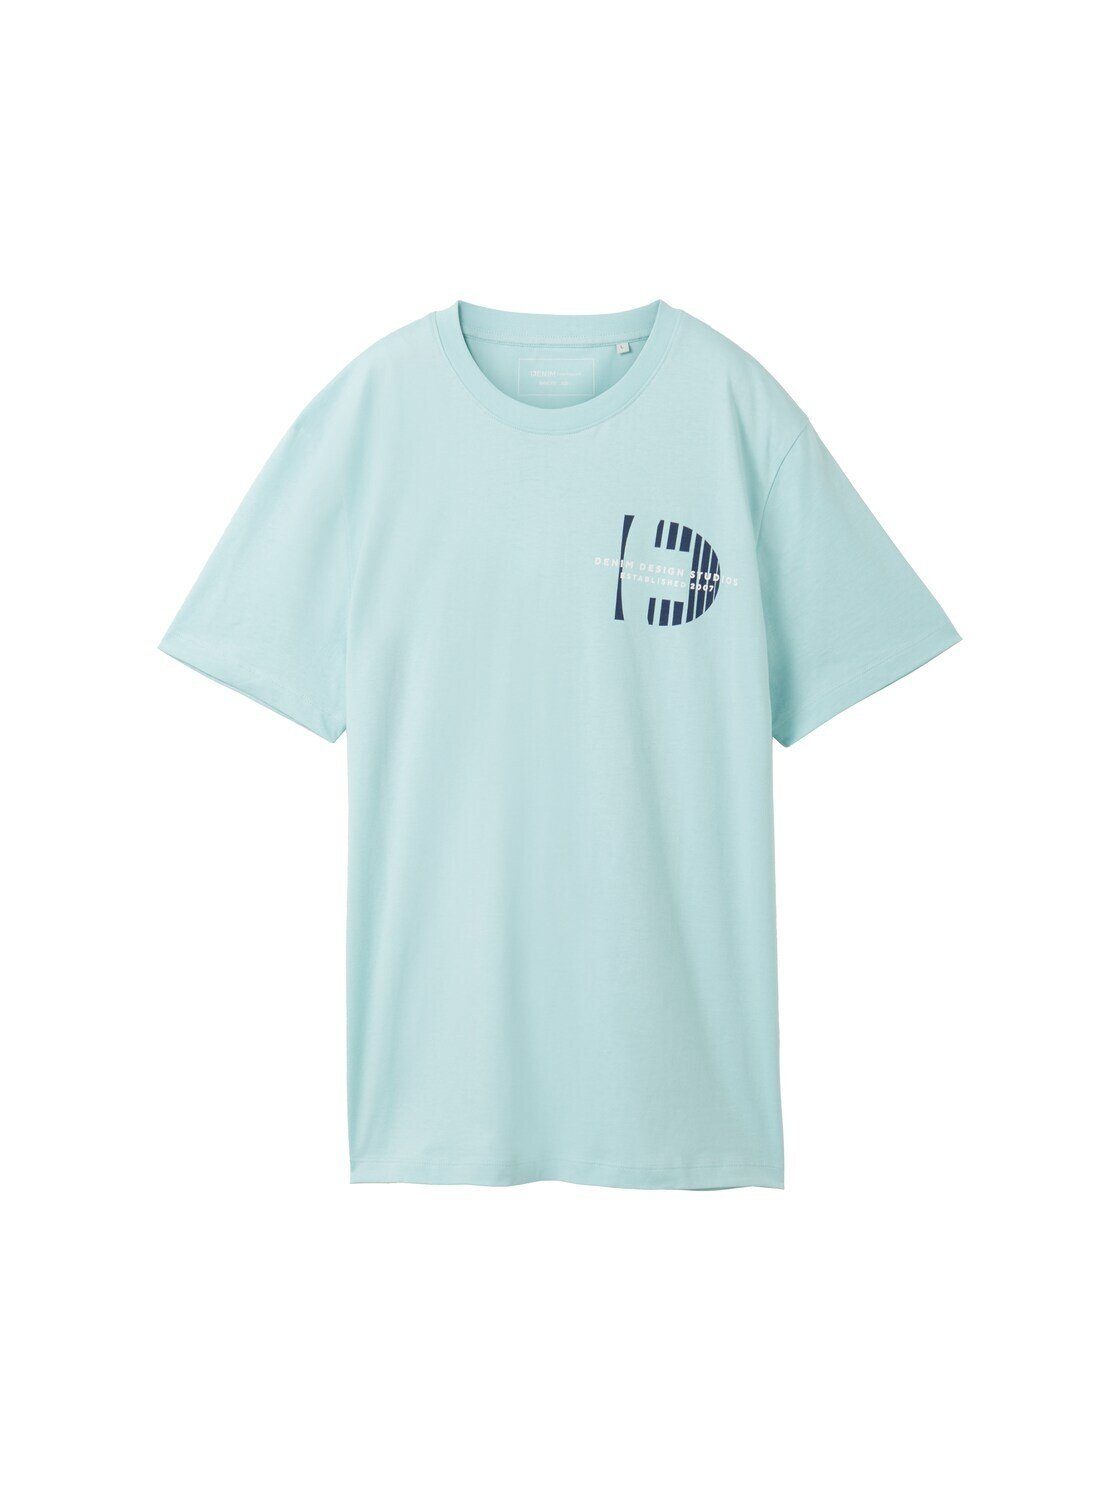 T-Shirt TAILOR turquoise TOM pastel T-Shirt Denim Print mit